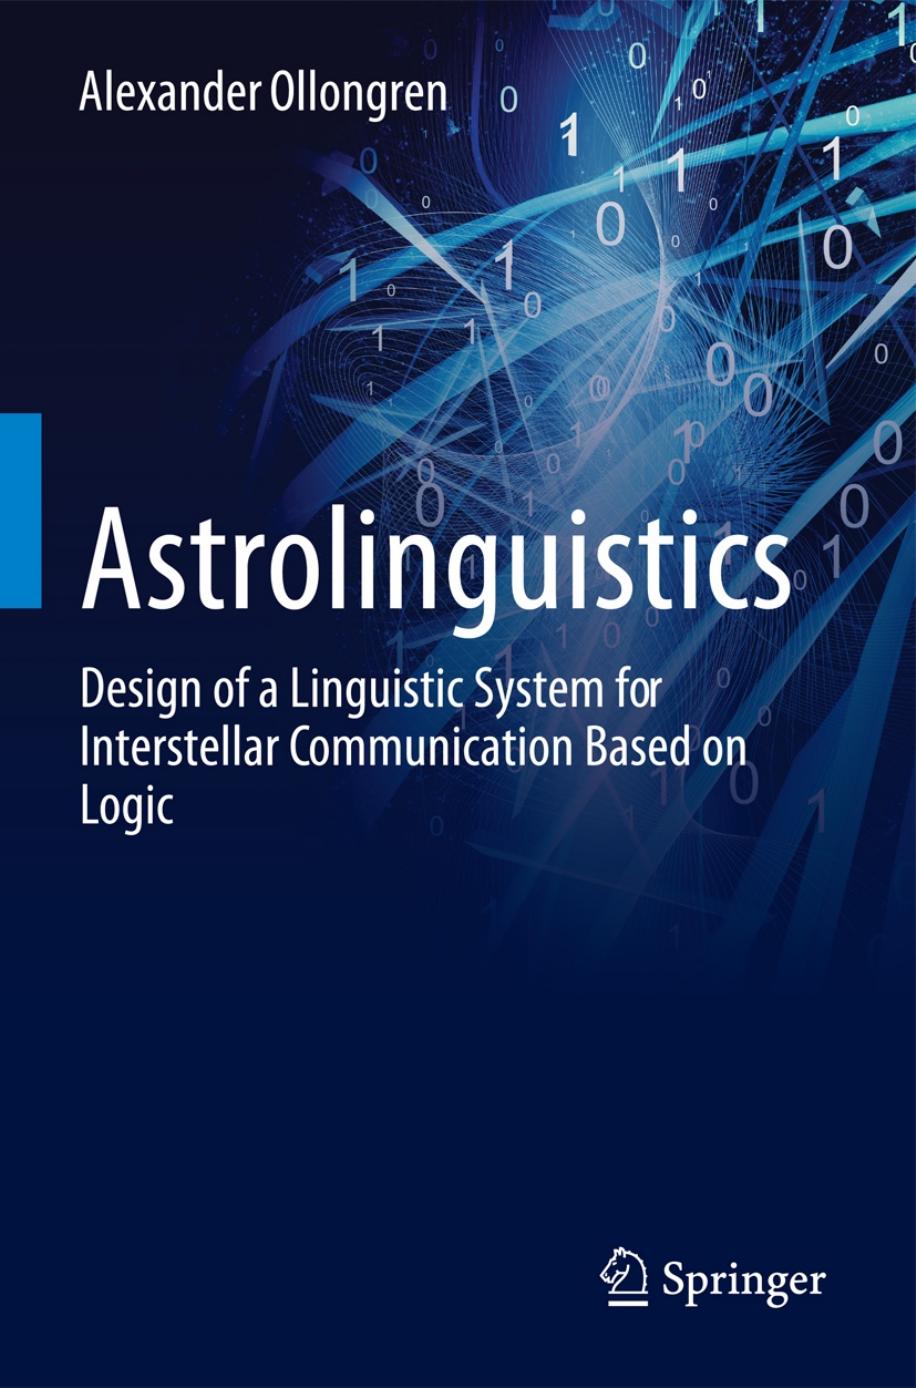 Astrolinguistics Design of a Linguistic System for Interstellar Communication Based on Logic by Alexander Ollongren (auth.)